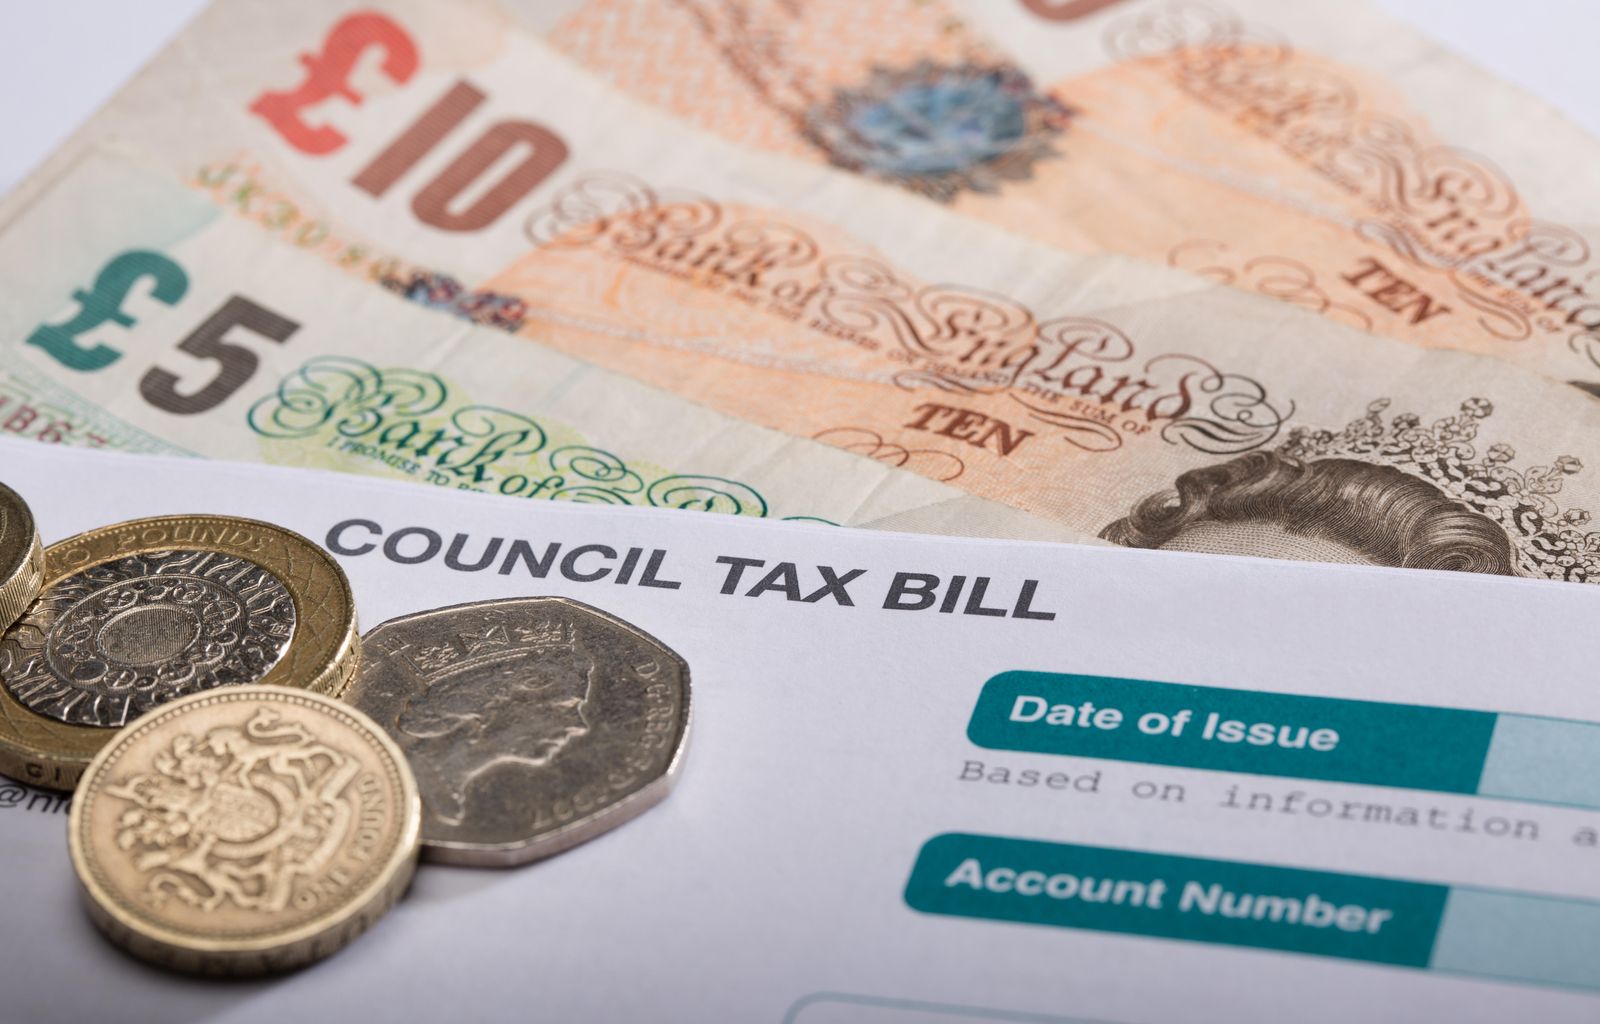 Great Yarmouth Borough Council Council Tax Benefit